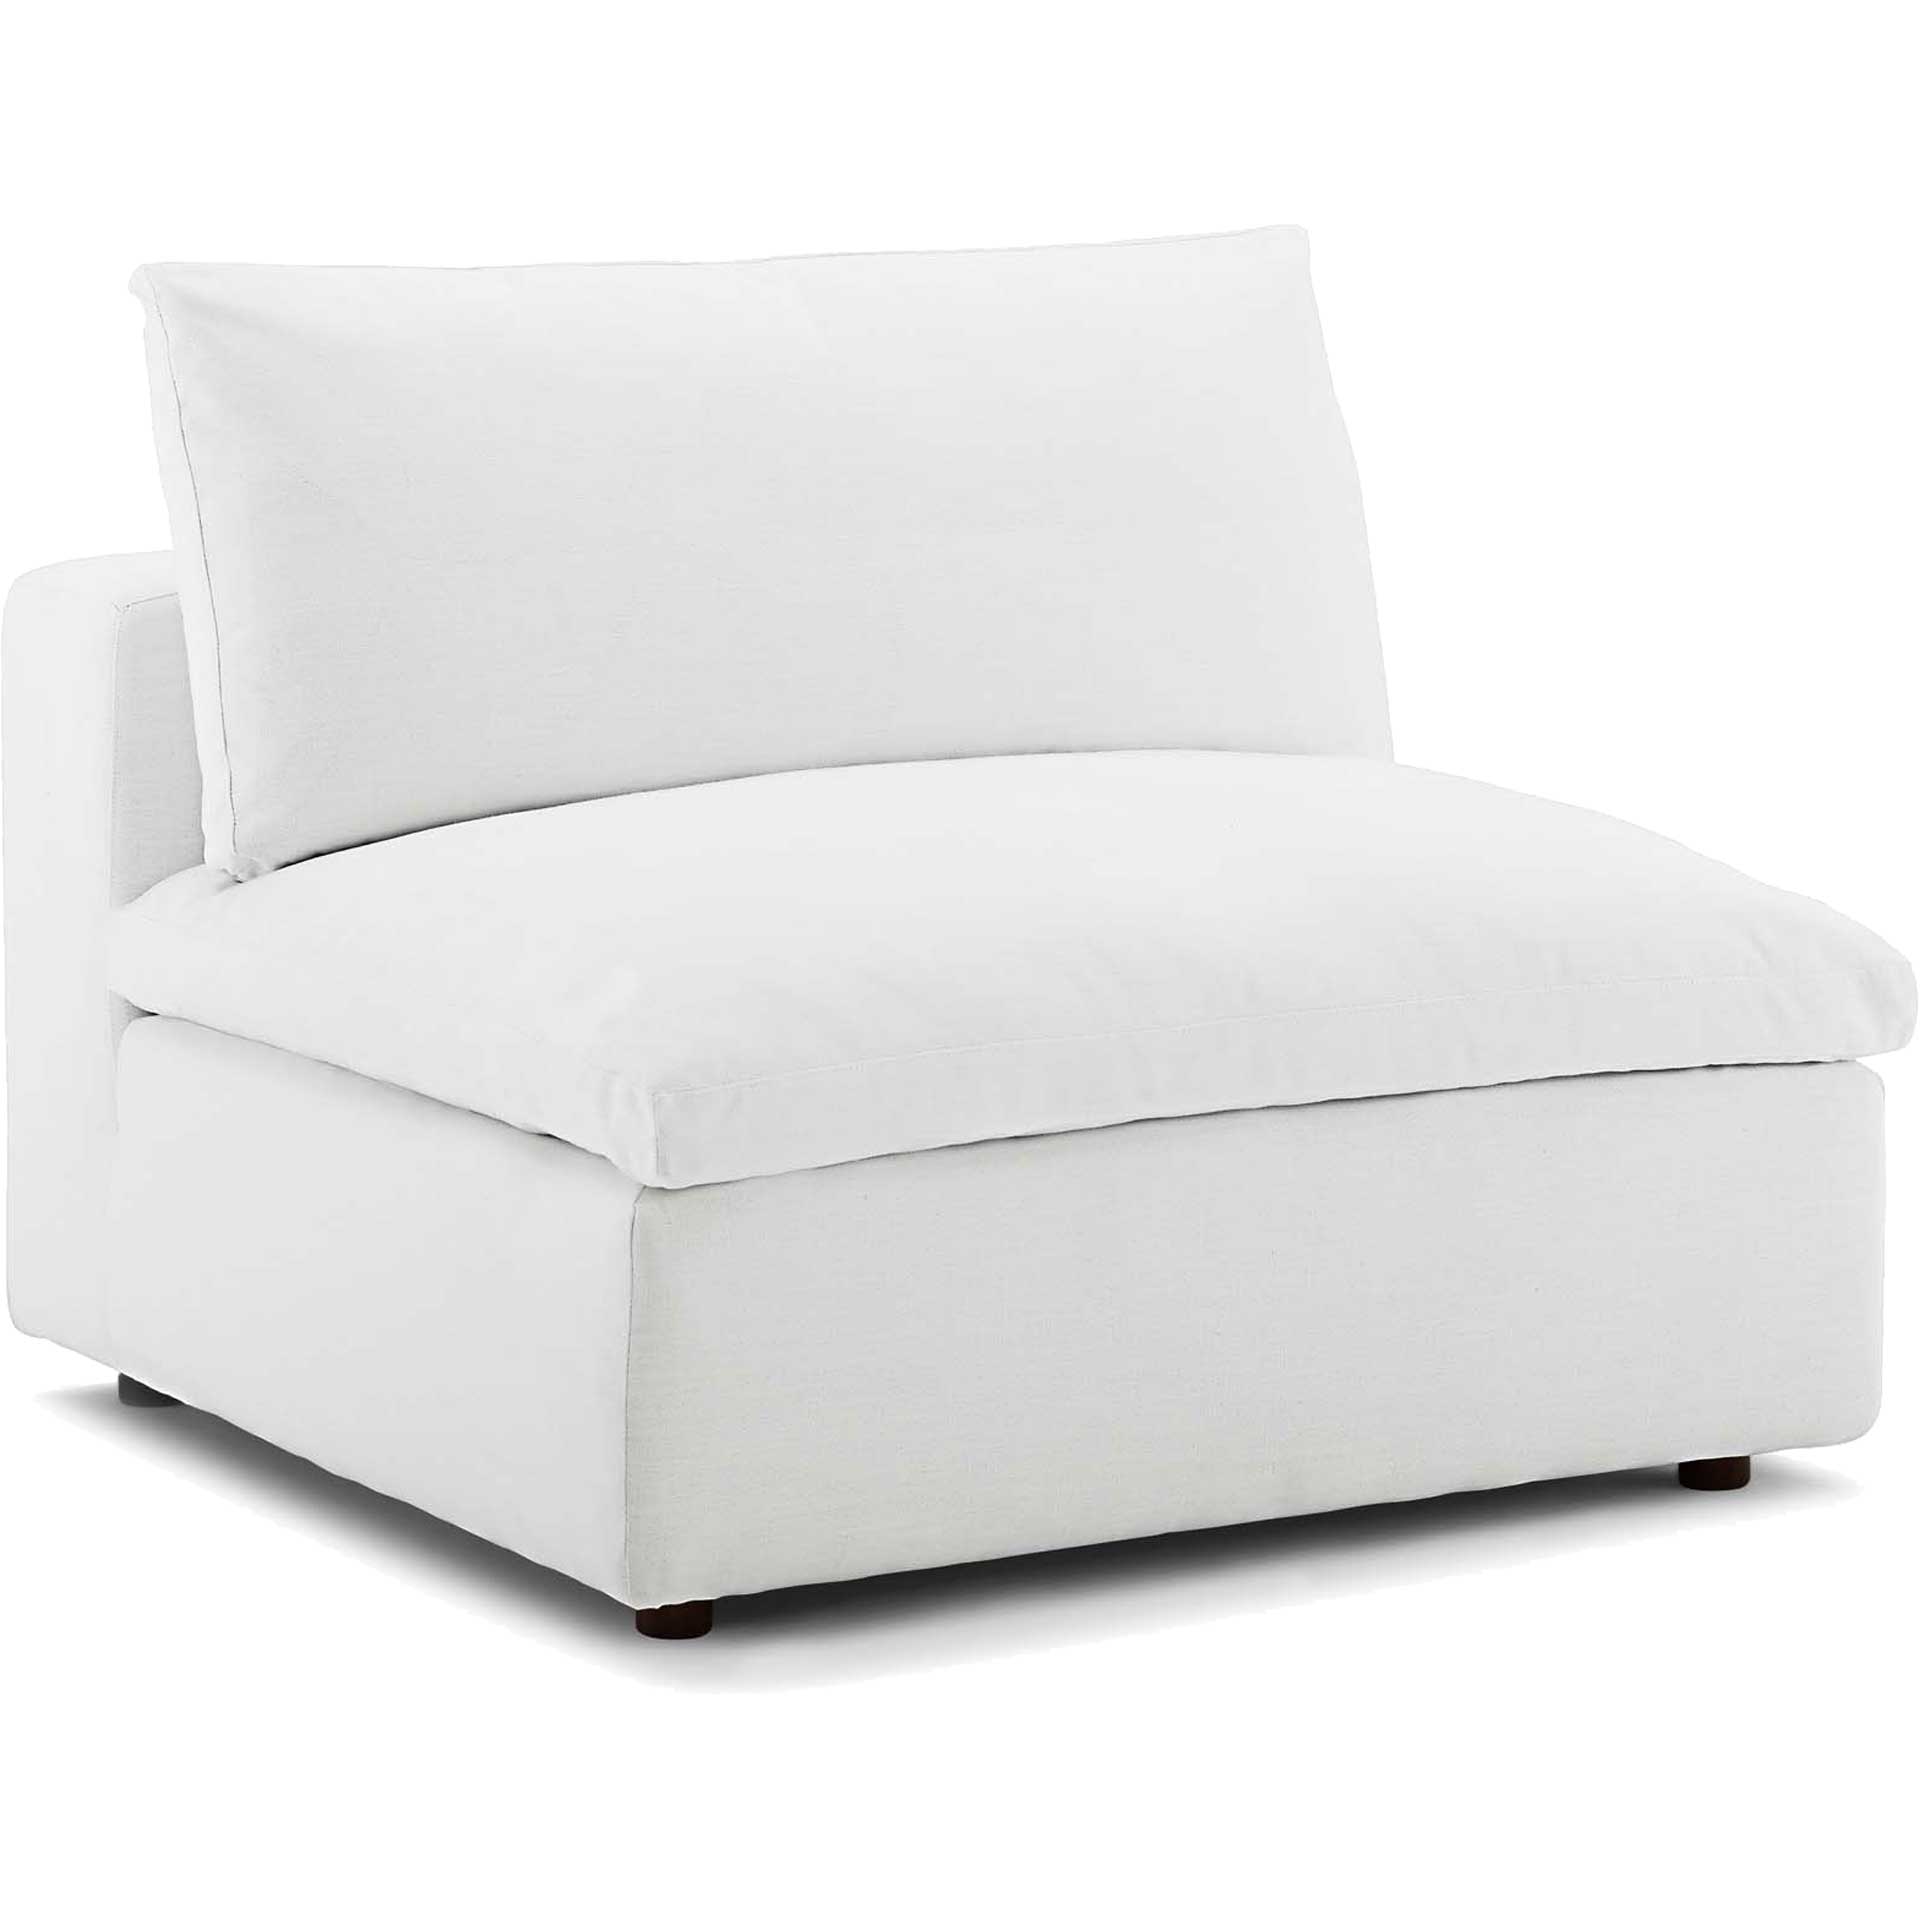 Carmen Long L-Shaped Sectional Sofa White